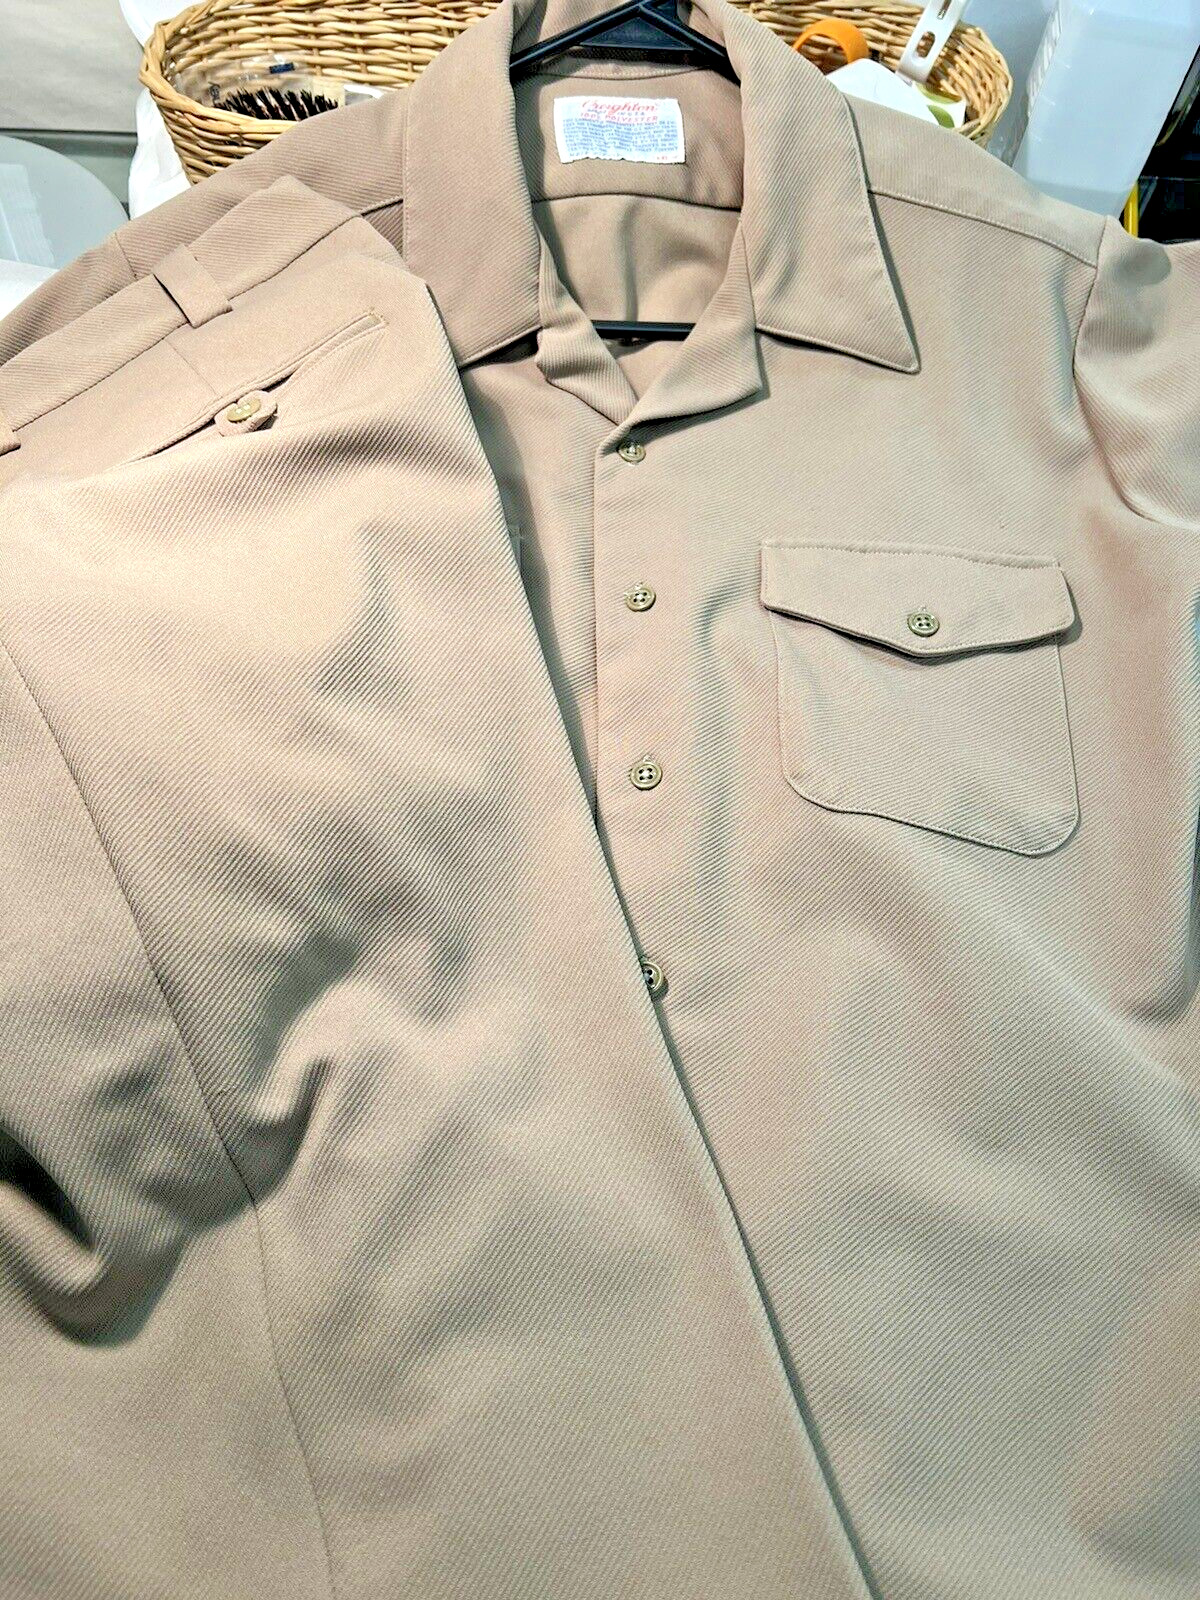 VTG Vietnam US Army Creighton Polyester Khaki Short Sleeve Shirt Pants Uniform